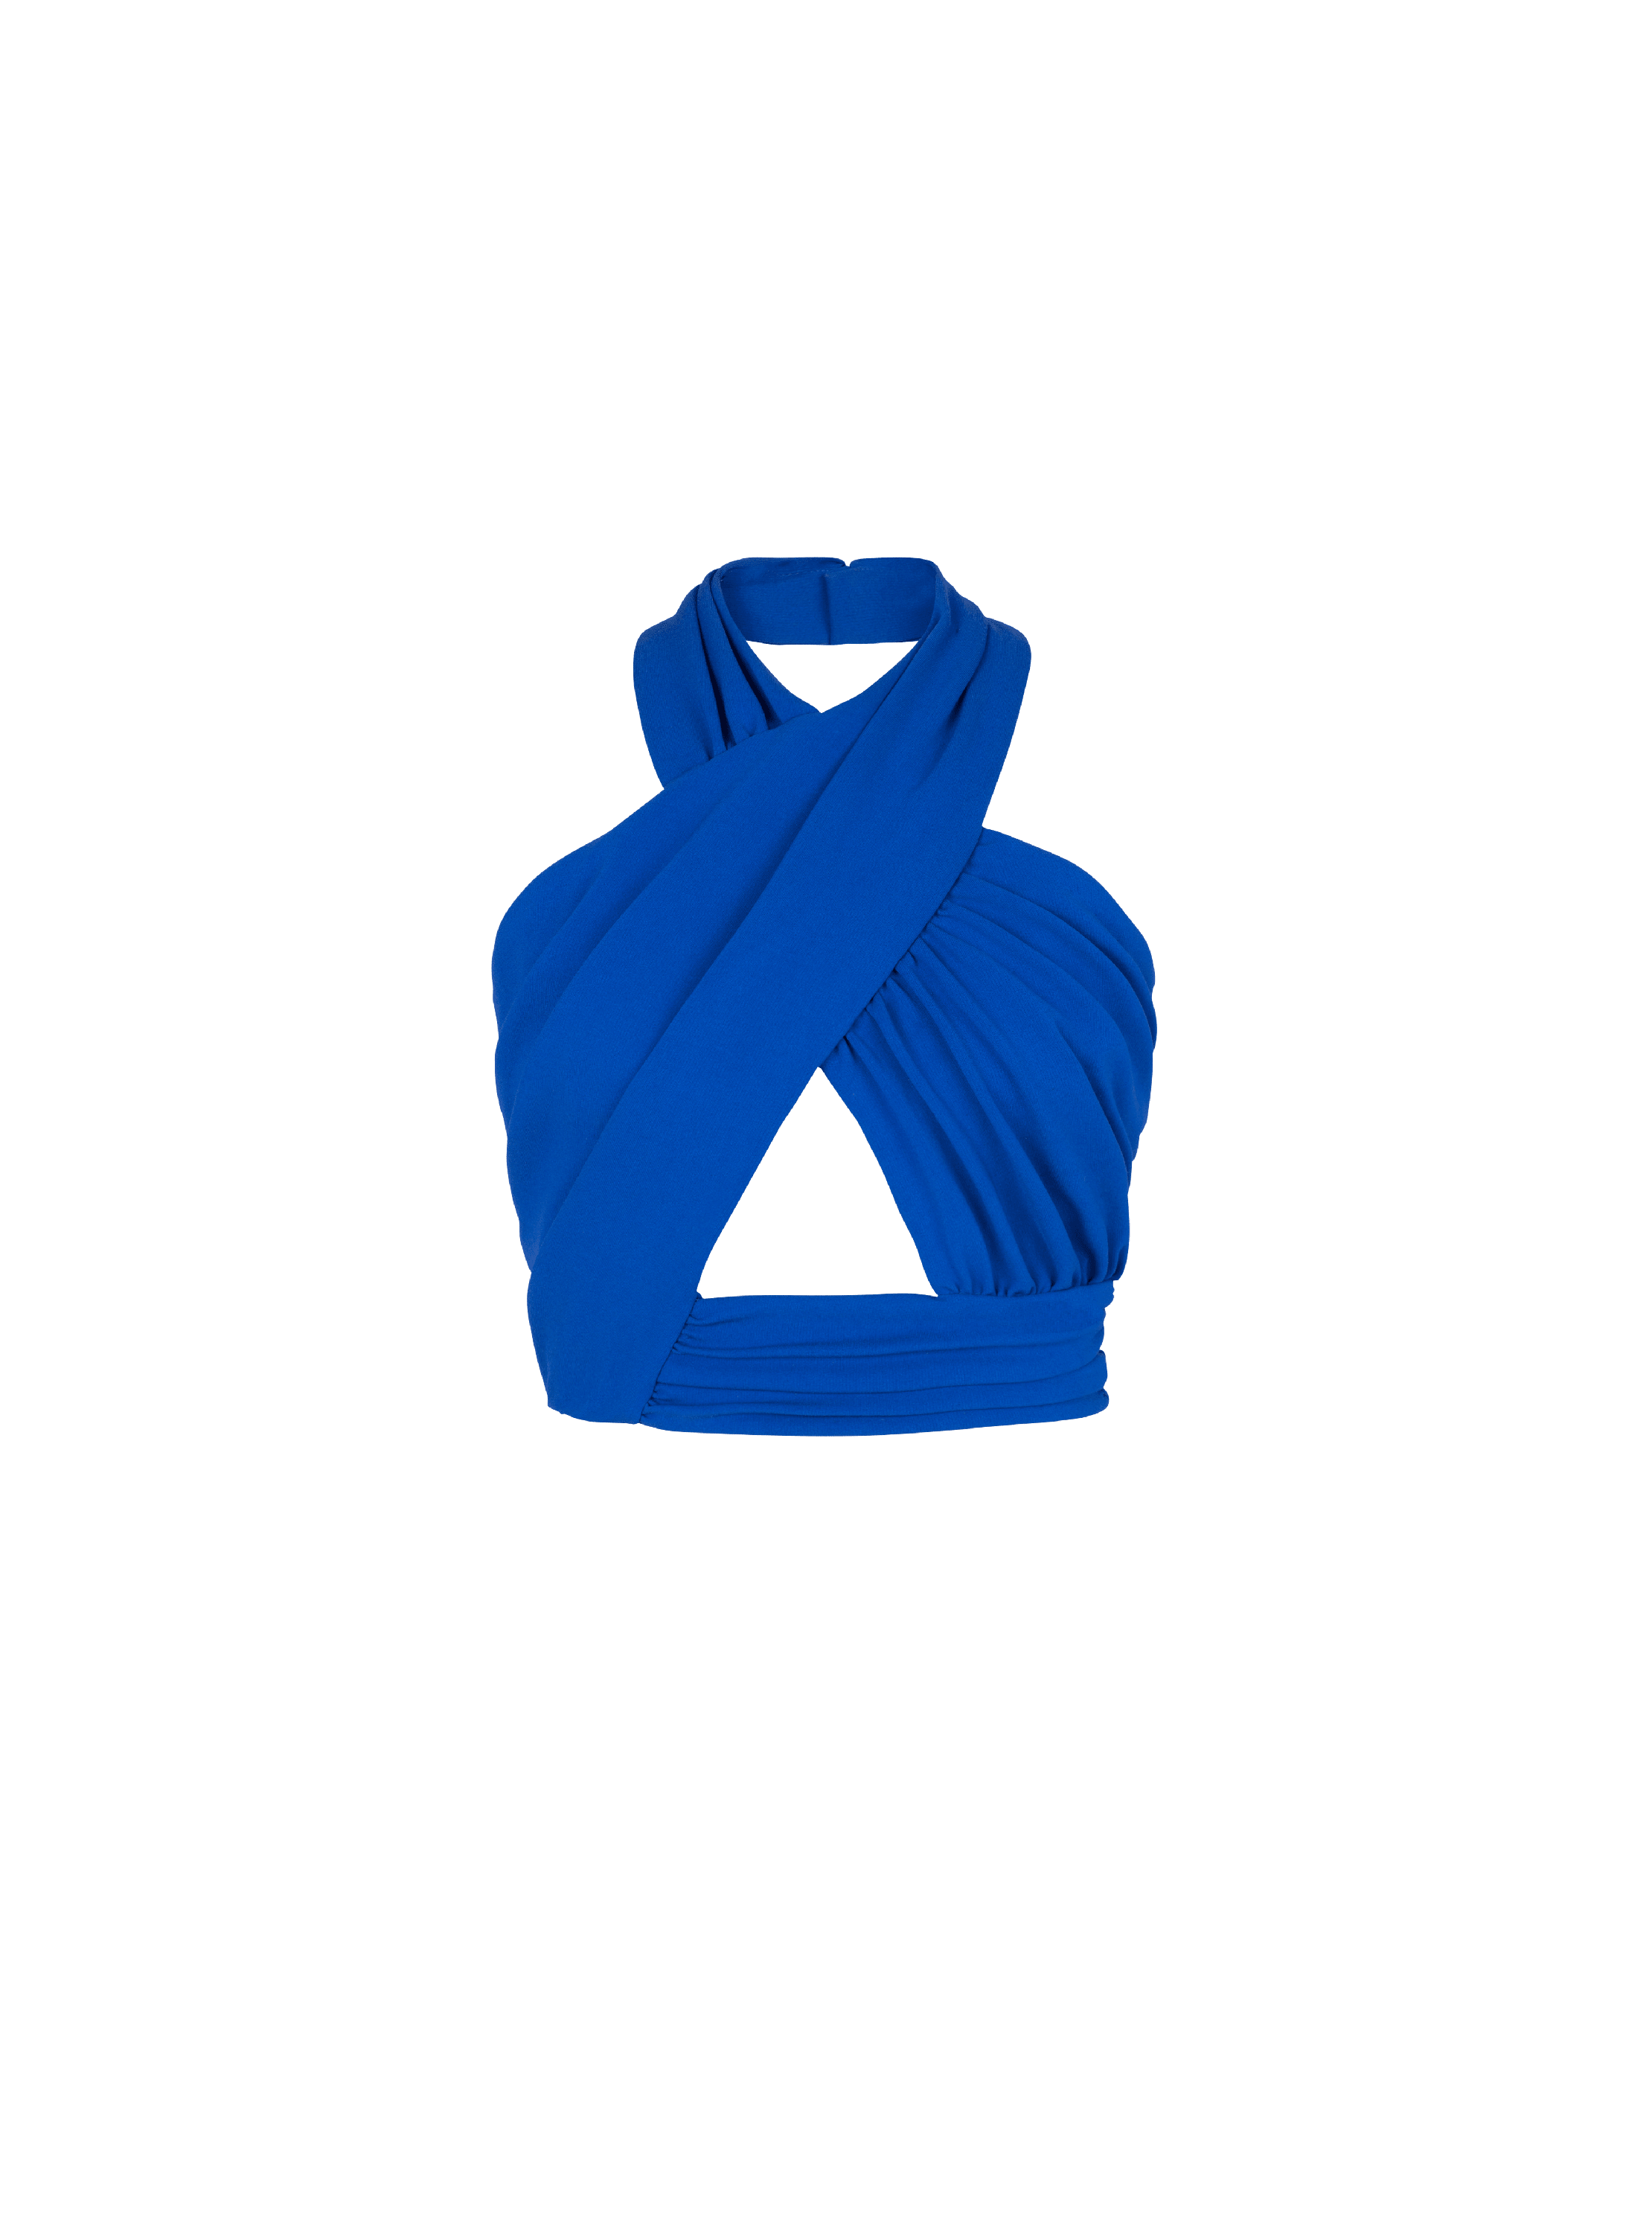 Draped jersey crop top, blue, hi-res